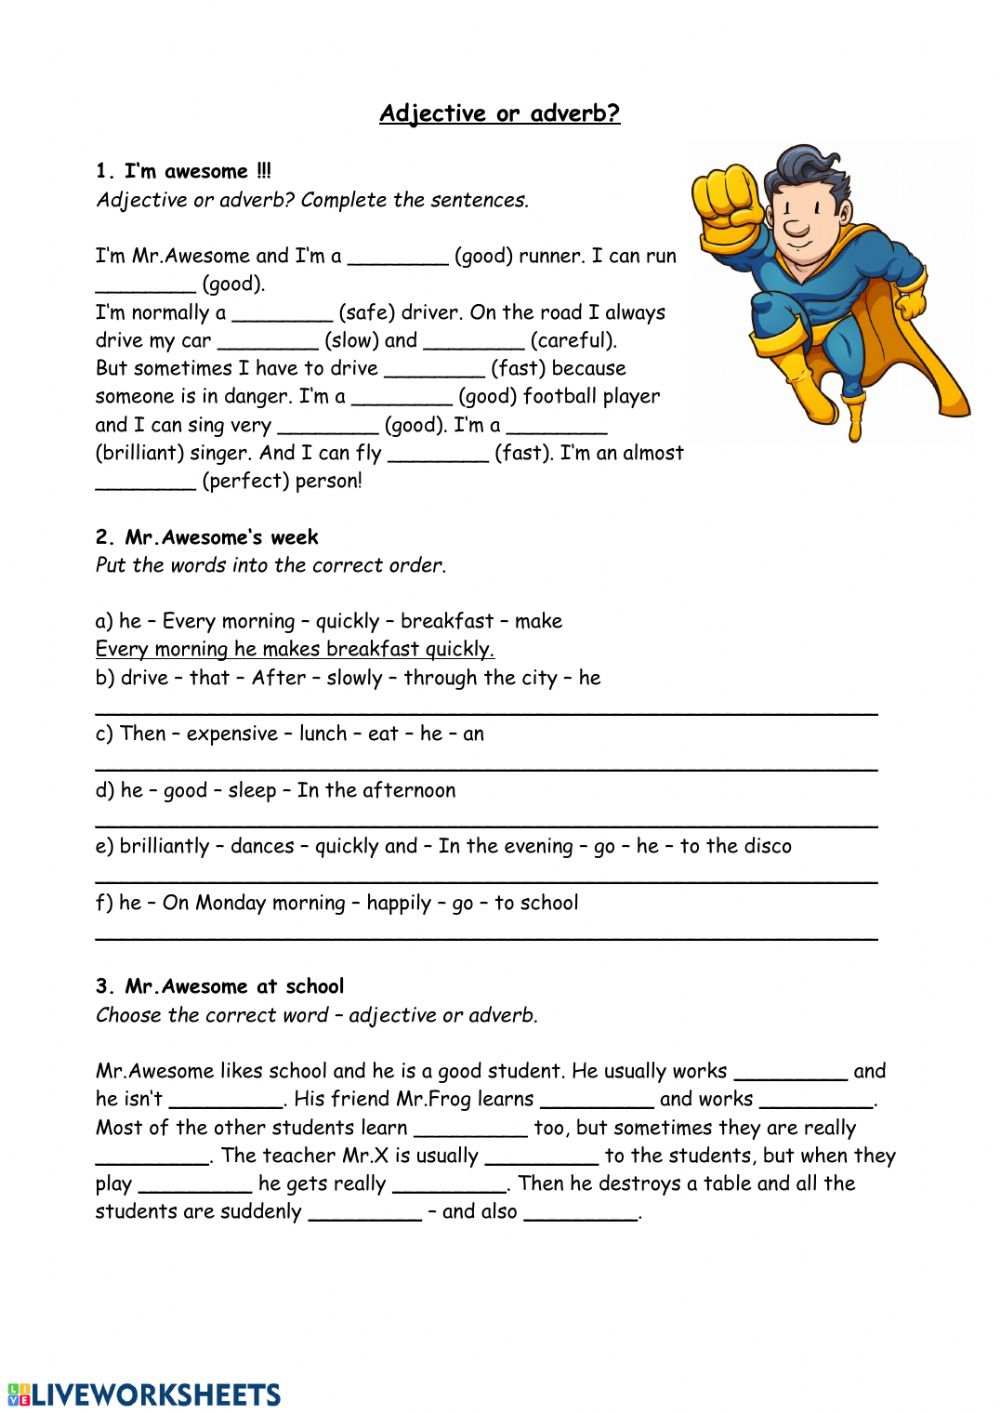 adjective-and-adverb-phrases-worksheets-pdf-adverbworksheets